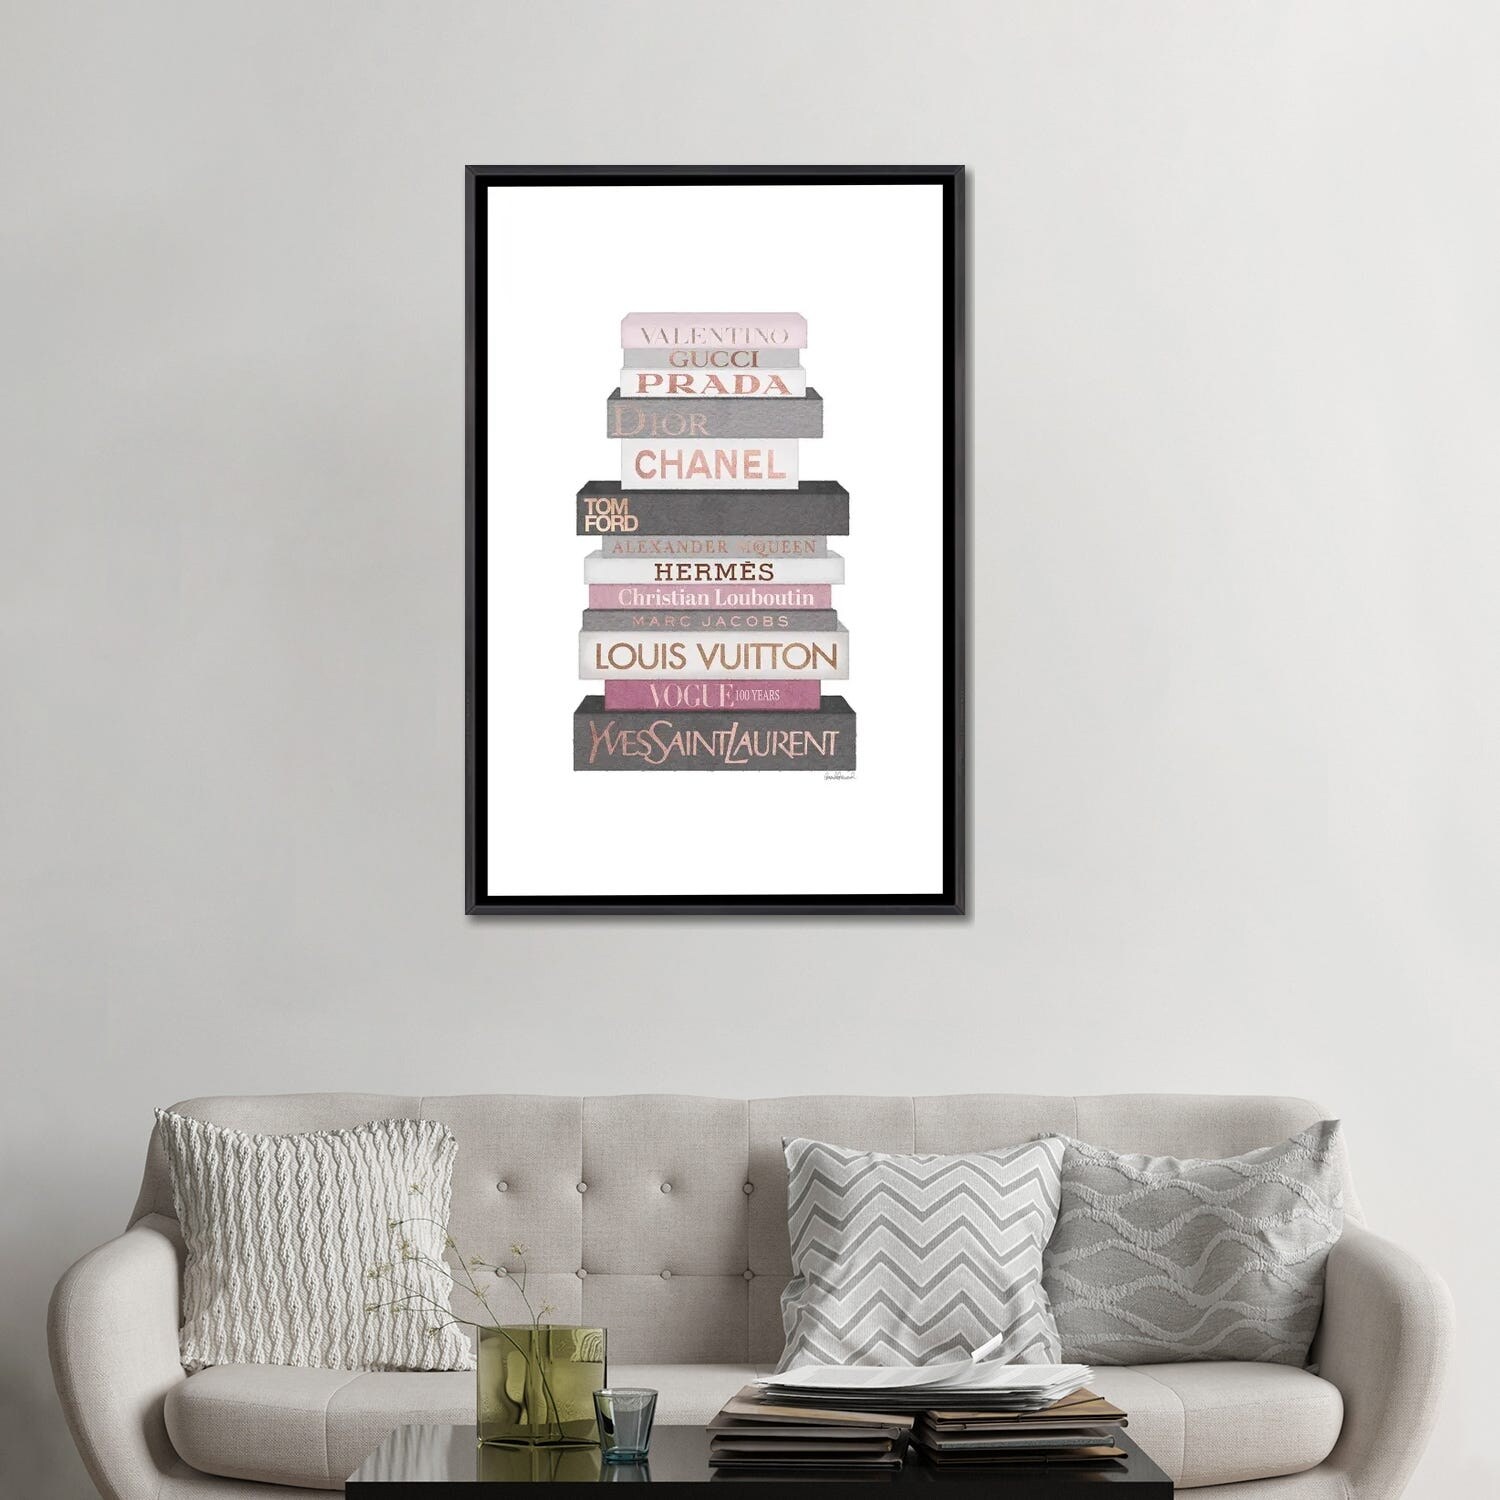 Tall Grey & Pink Fashion Books Throw Pillow By Amanda Greenwood